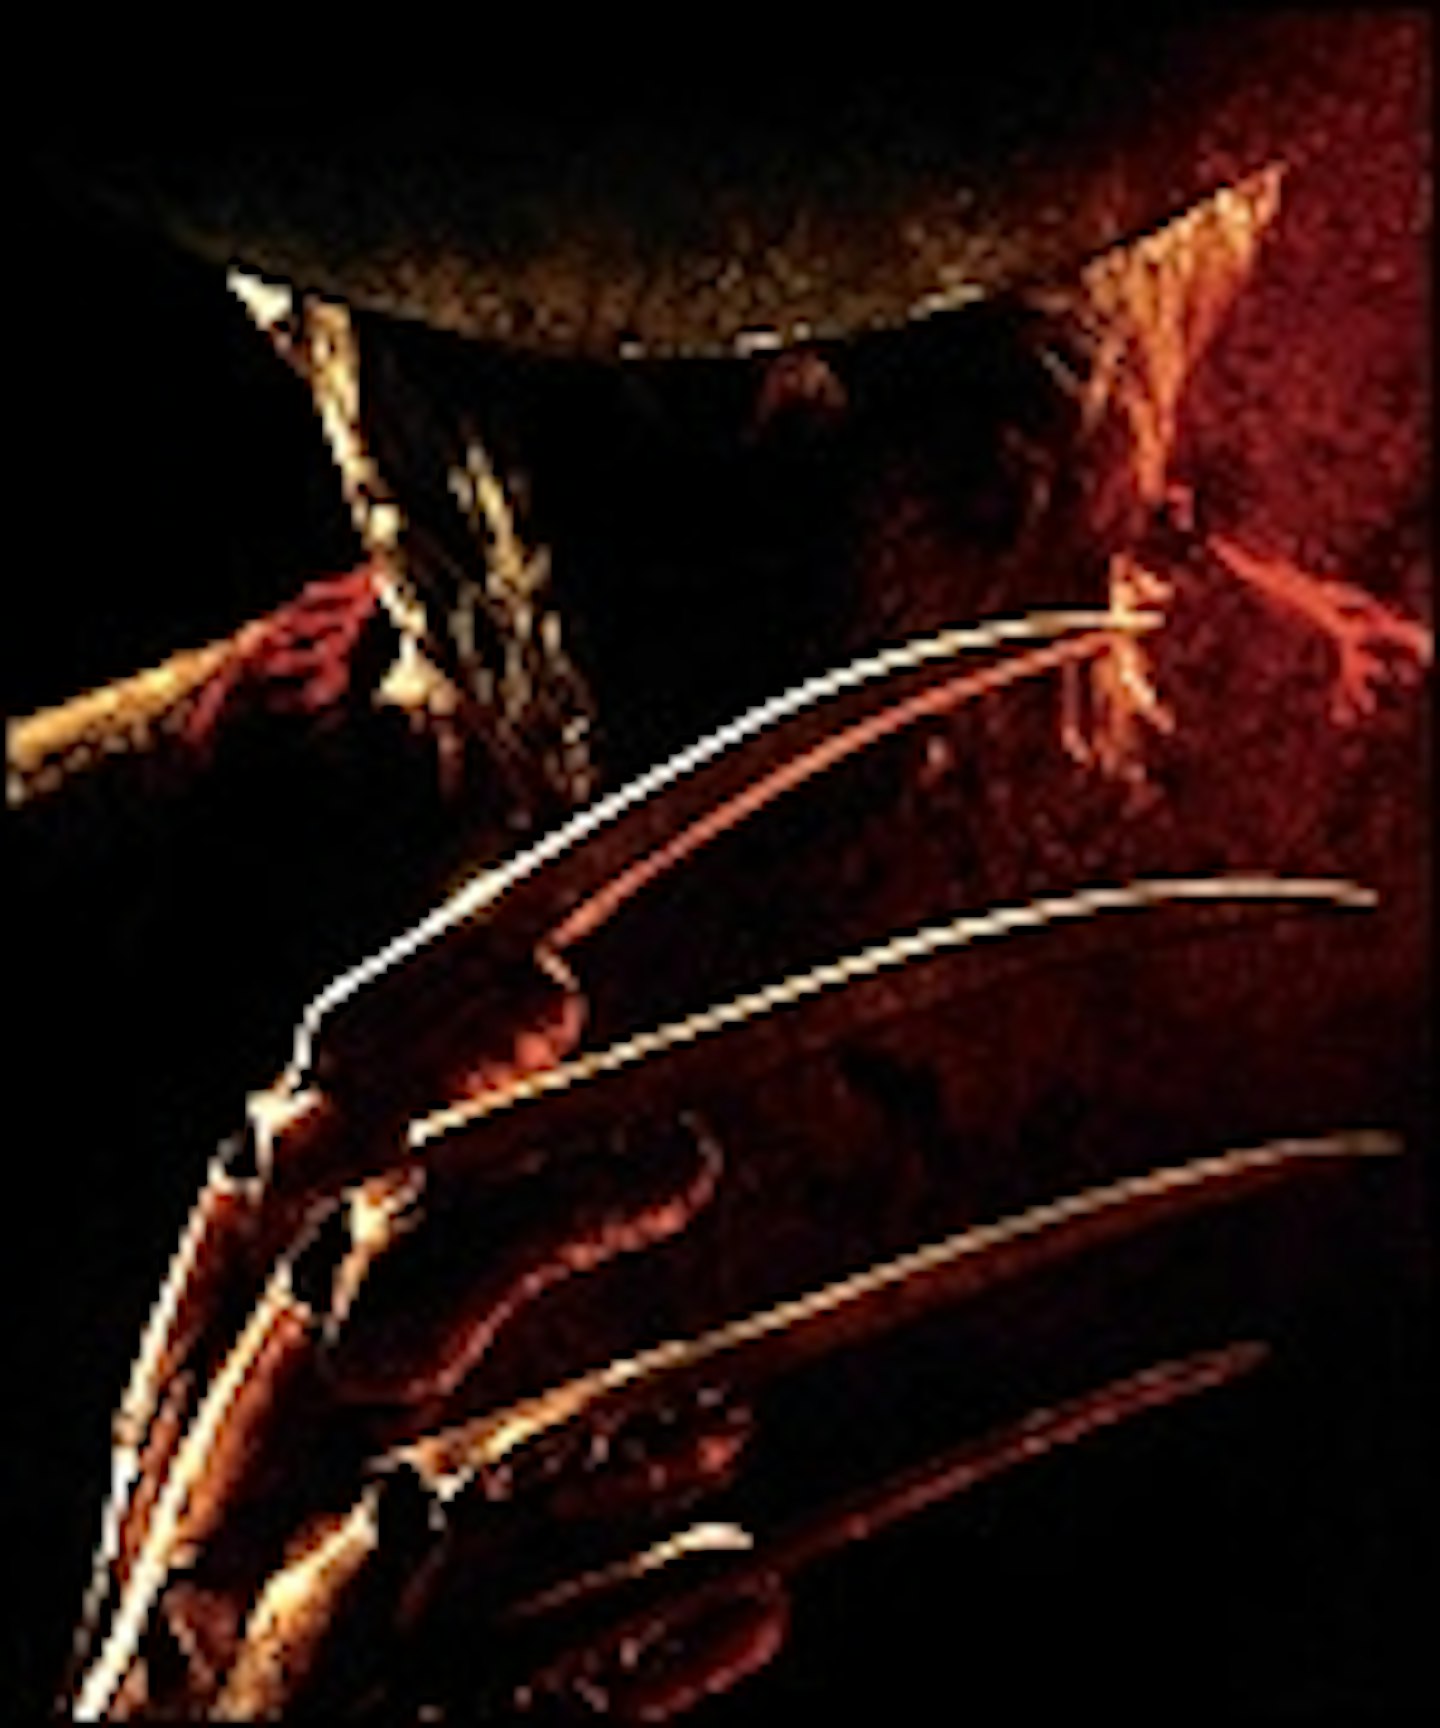 New Nightmare On Elm Street Trailer Up